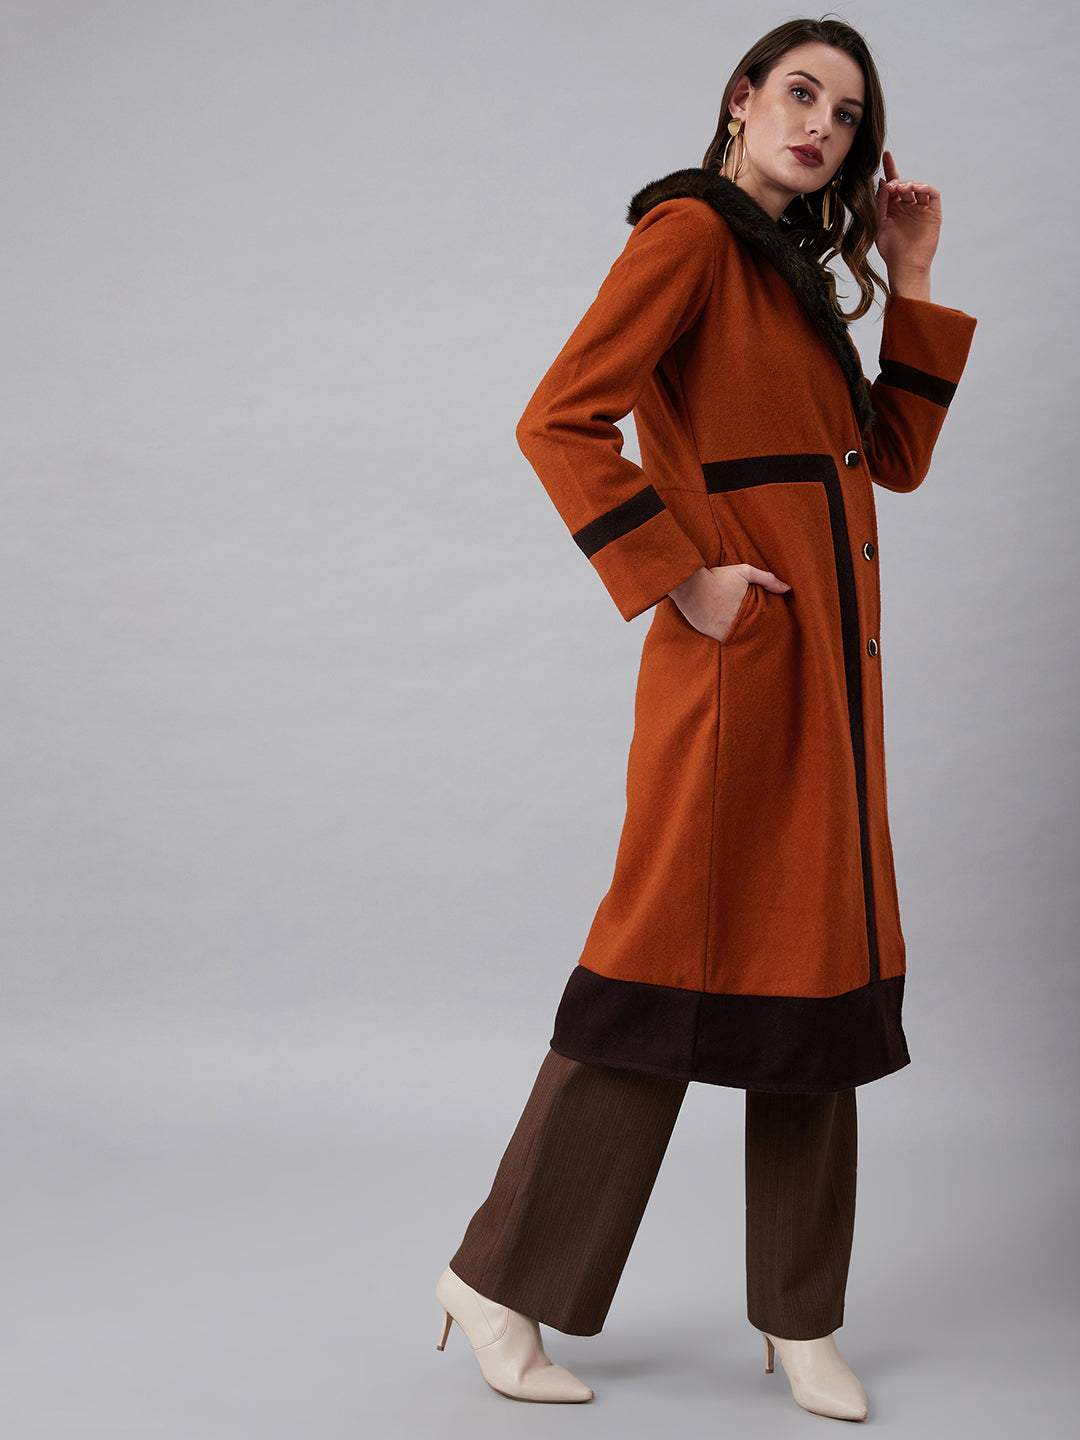 Athena Women Rust Orange & Brown Knee-Length Faux Fur Trimmed Woolen Overcoat - Athena Lifestyle